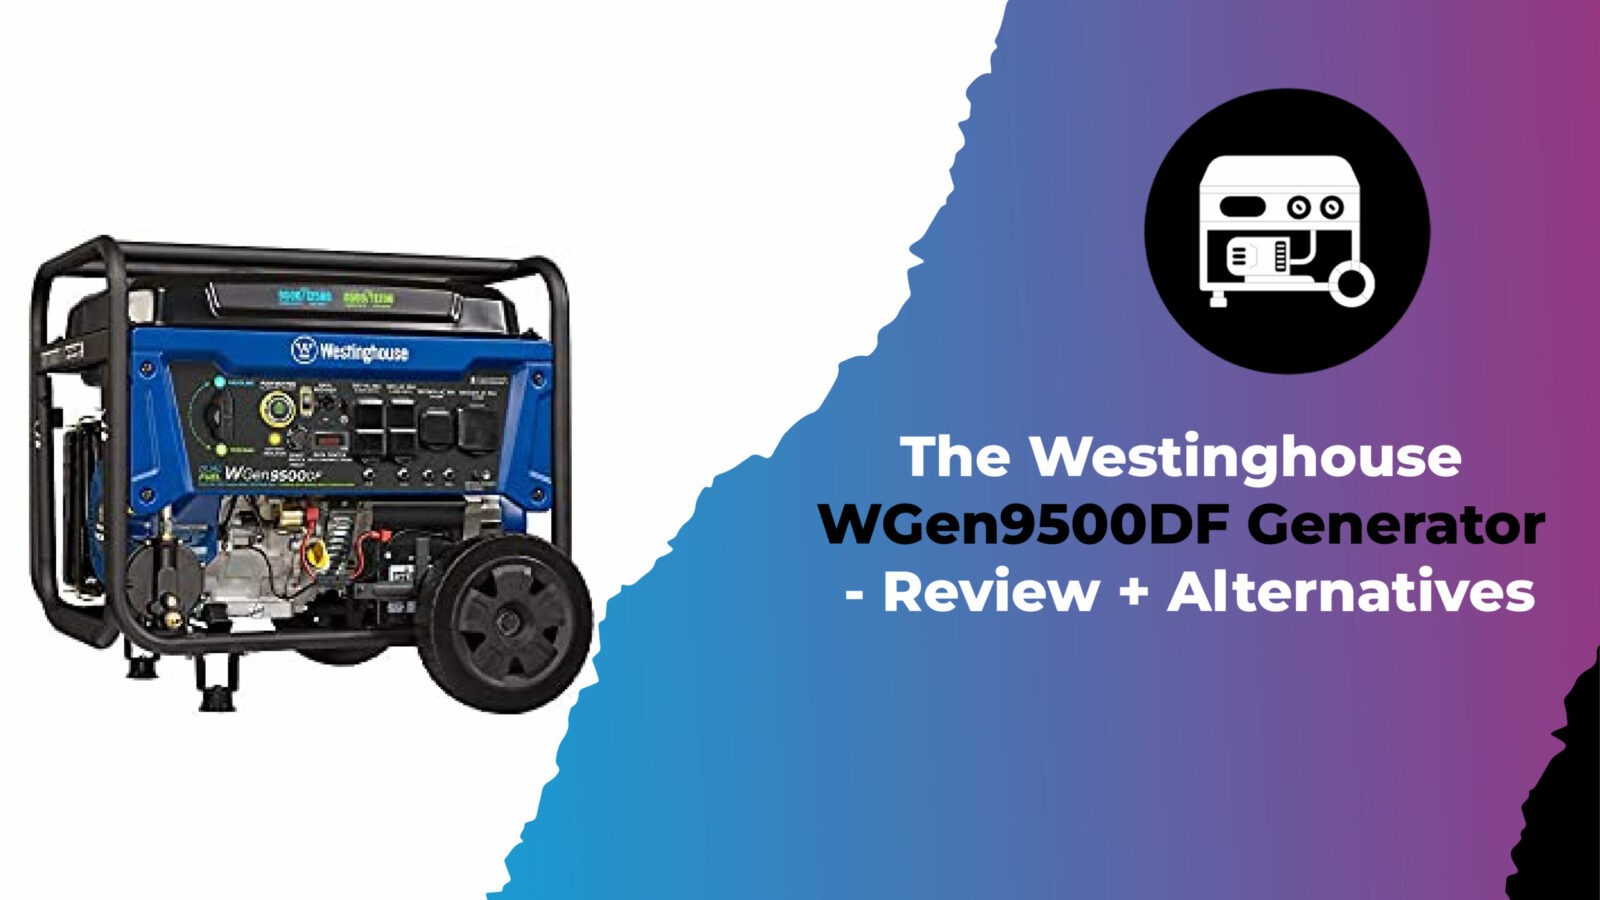 The Westinghouse WGen9500DF Generator - Review + Alternatives